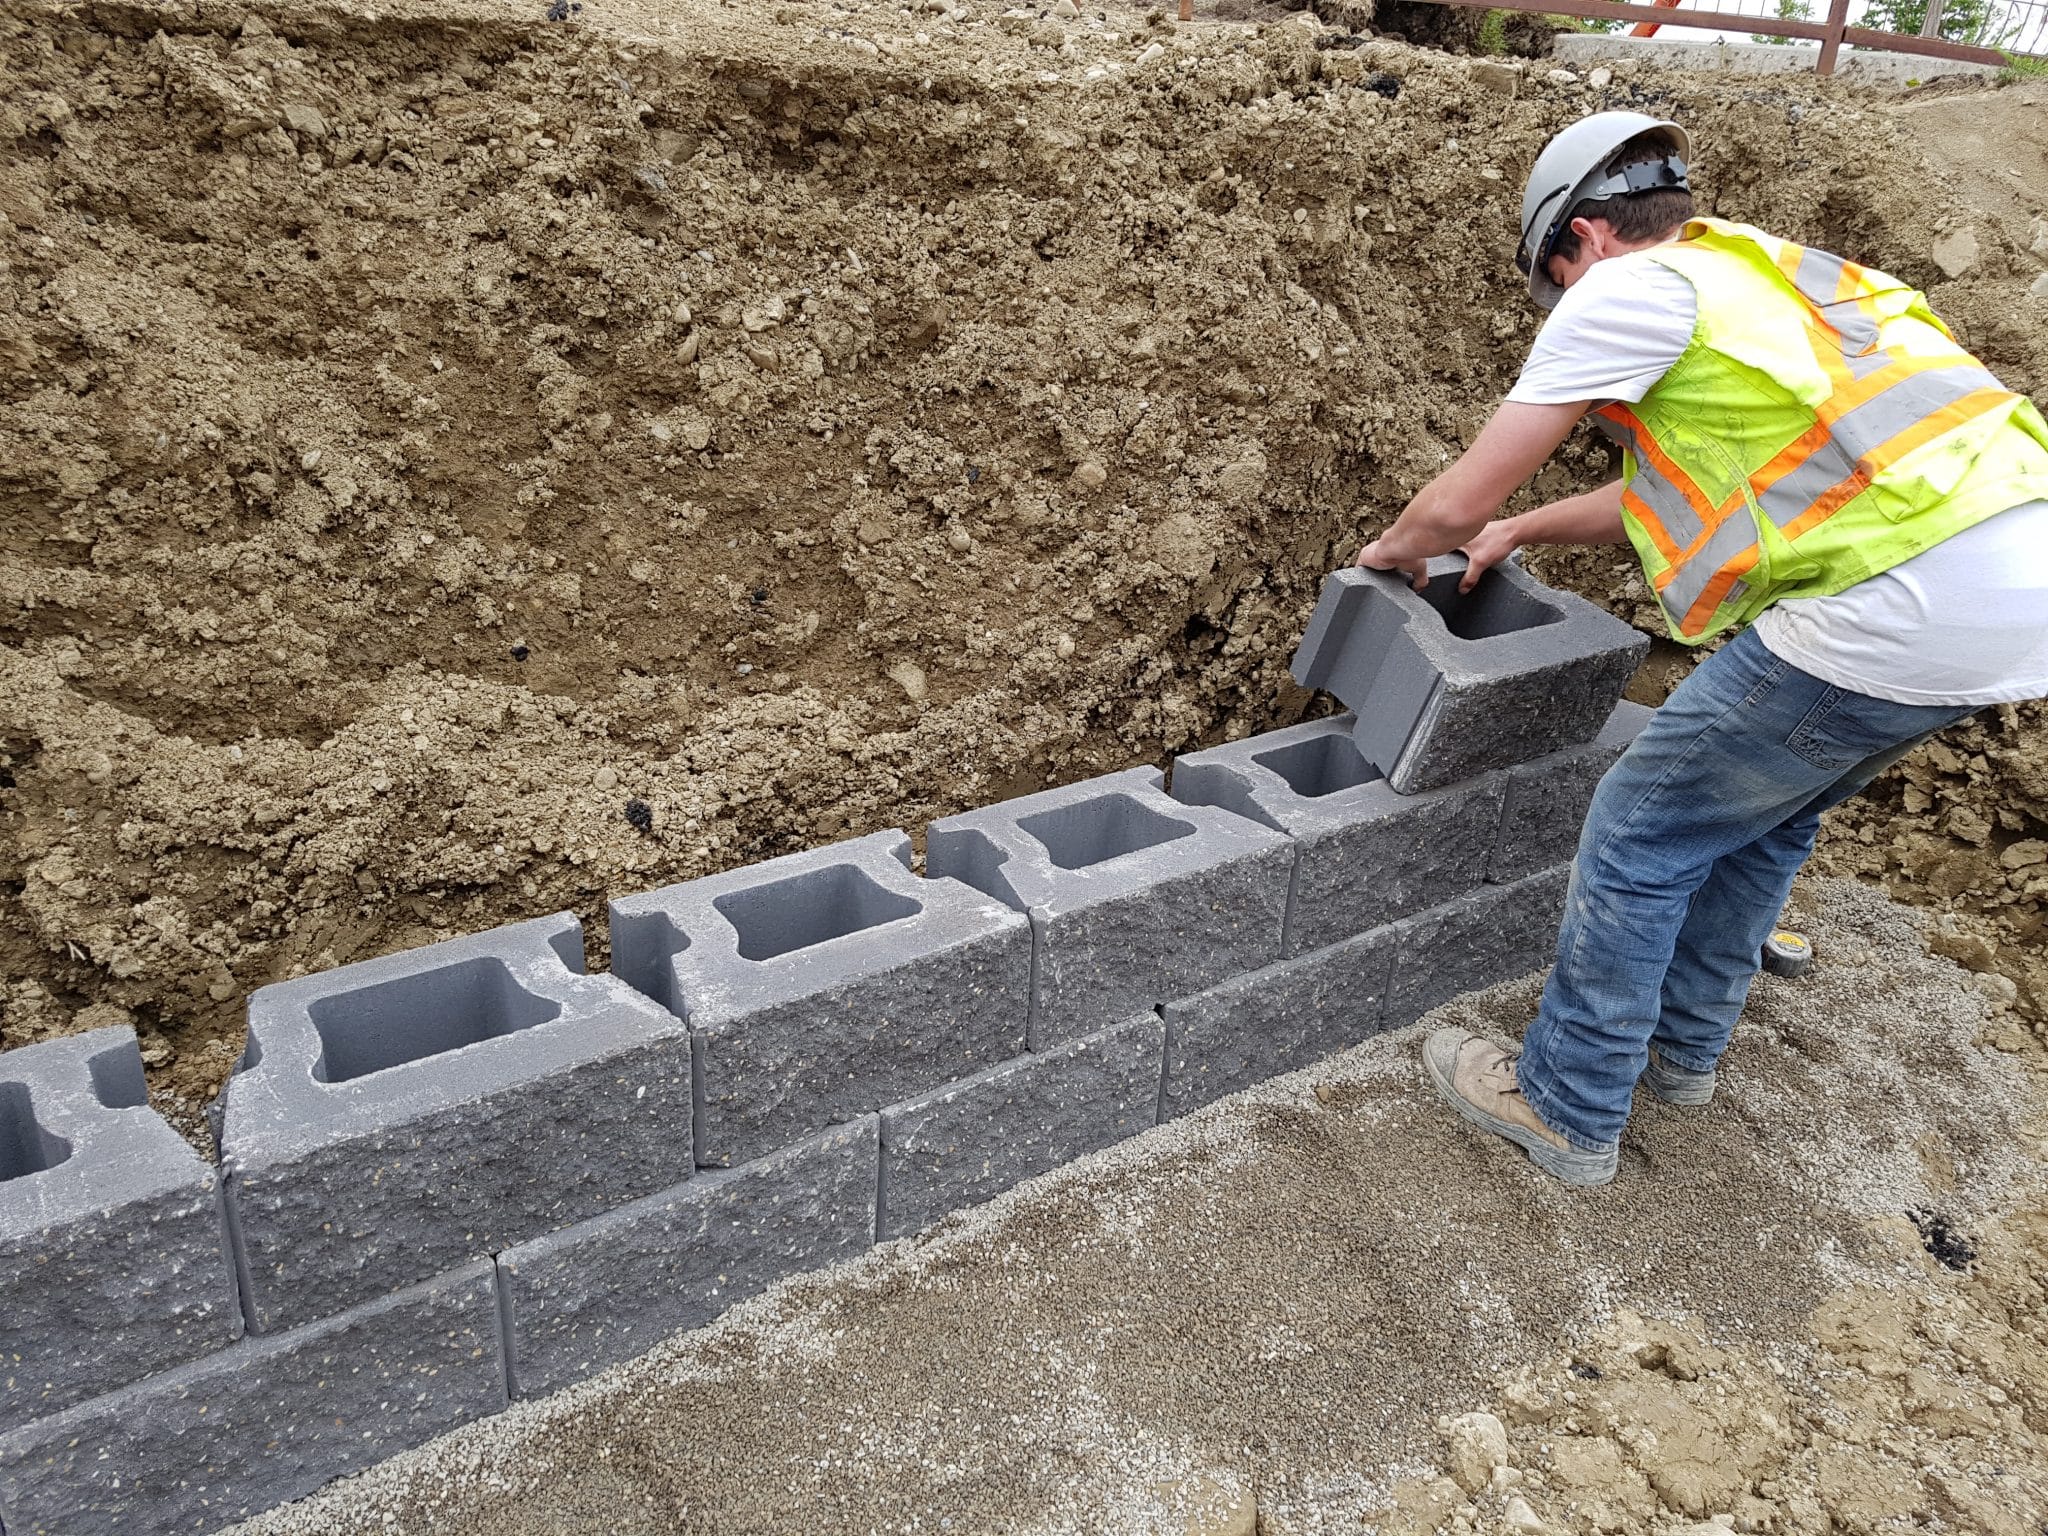 CornerStone 100 Retaining Wall Block Installation is Easy with SecureLugs